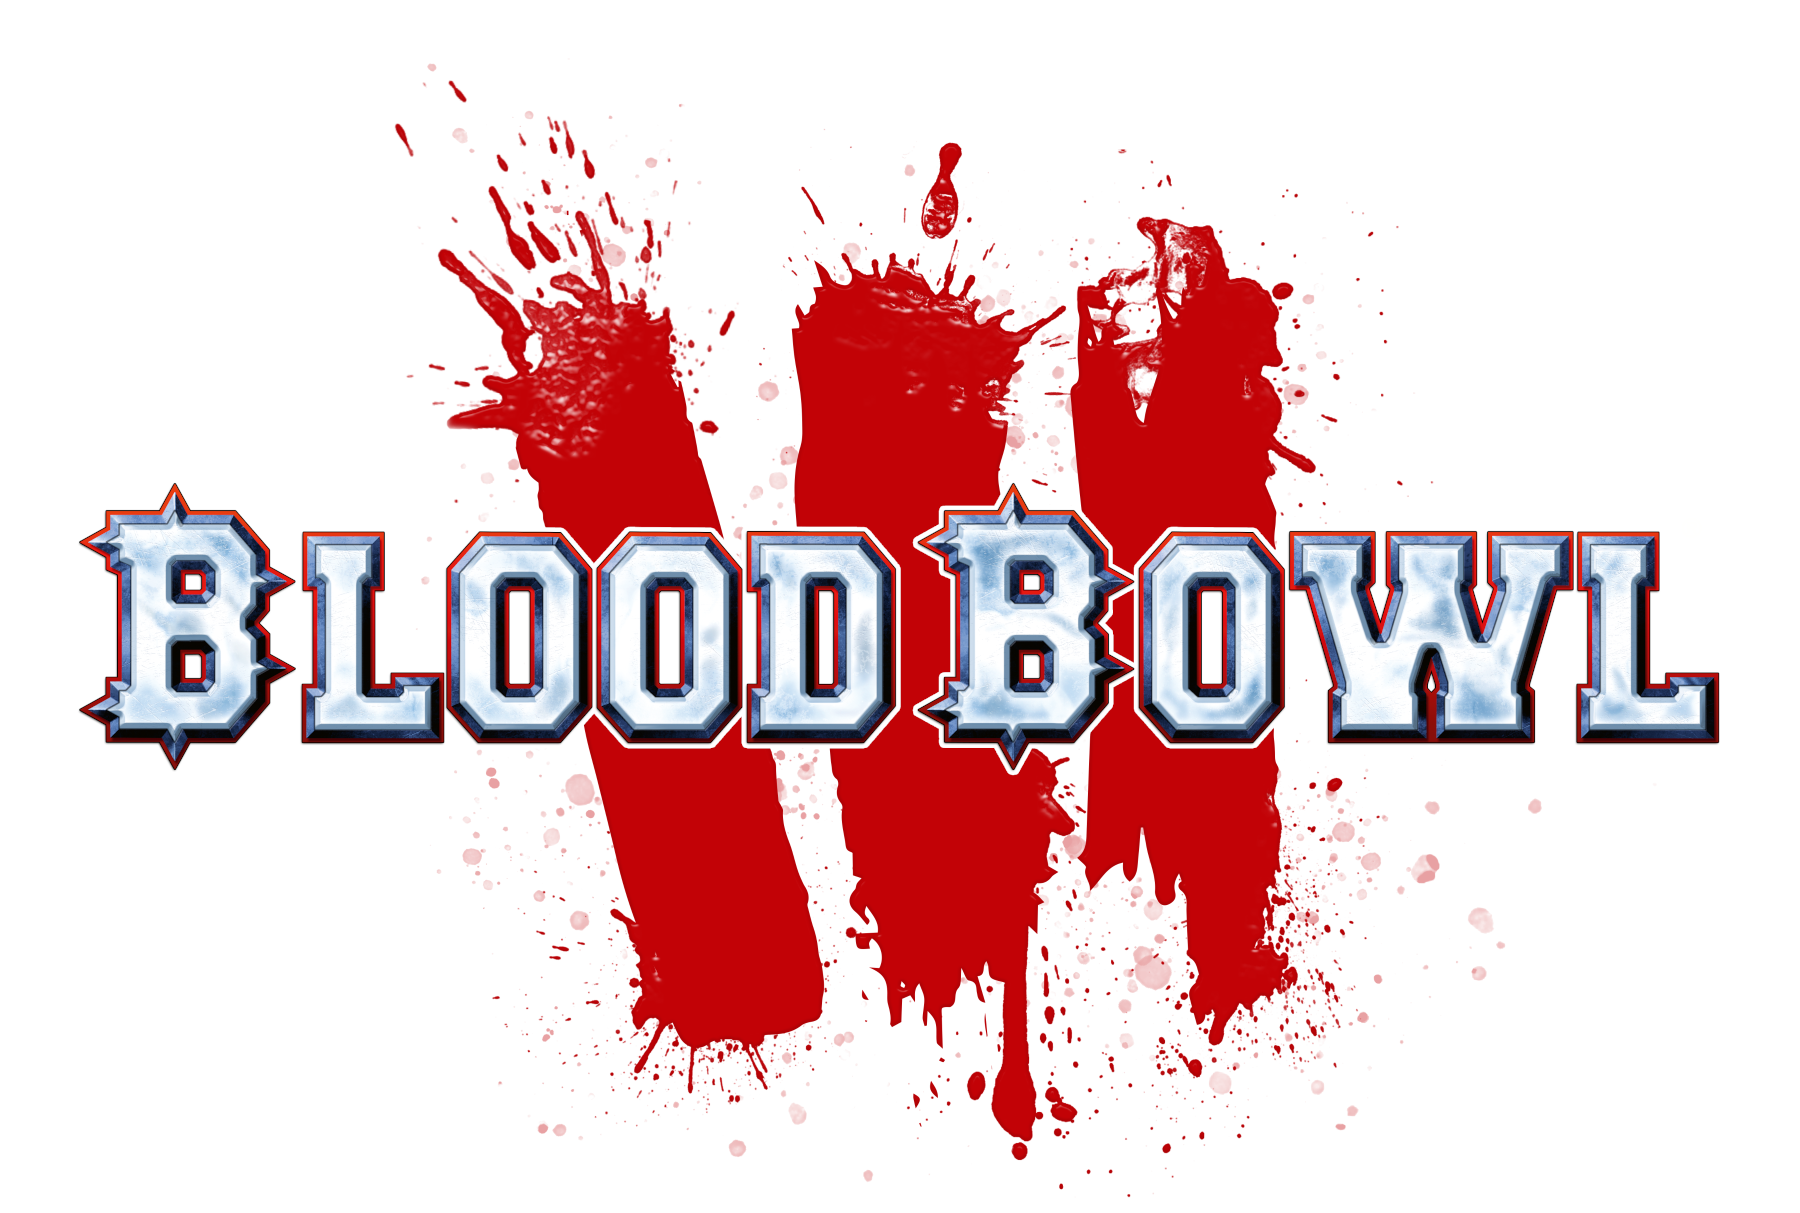 blood bowl 3 closed beta